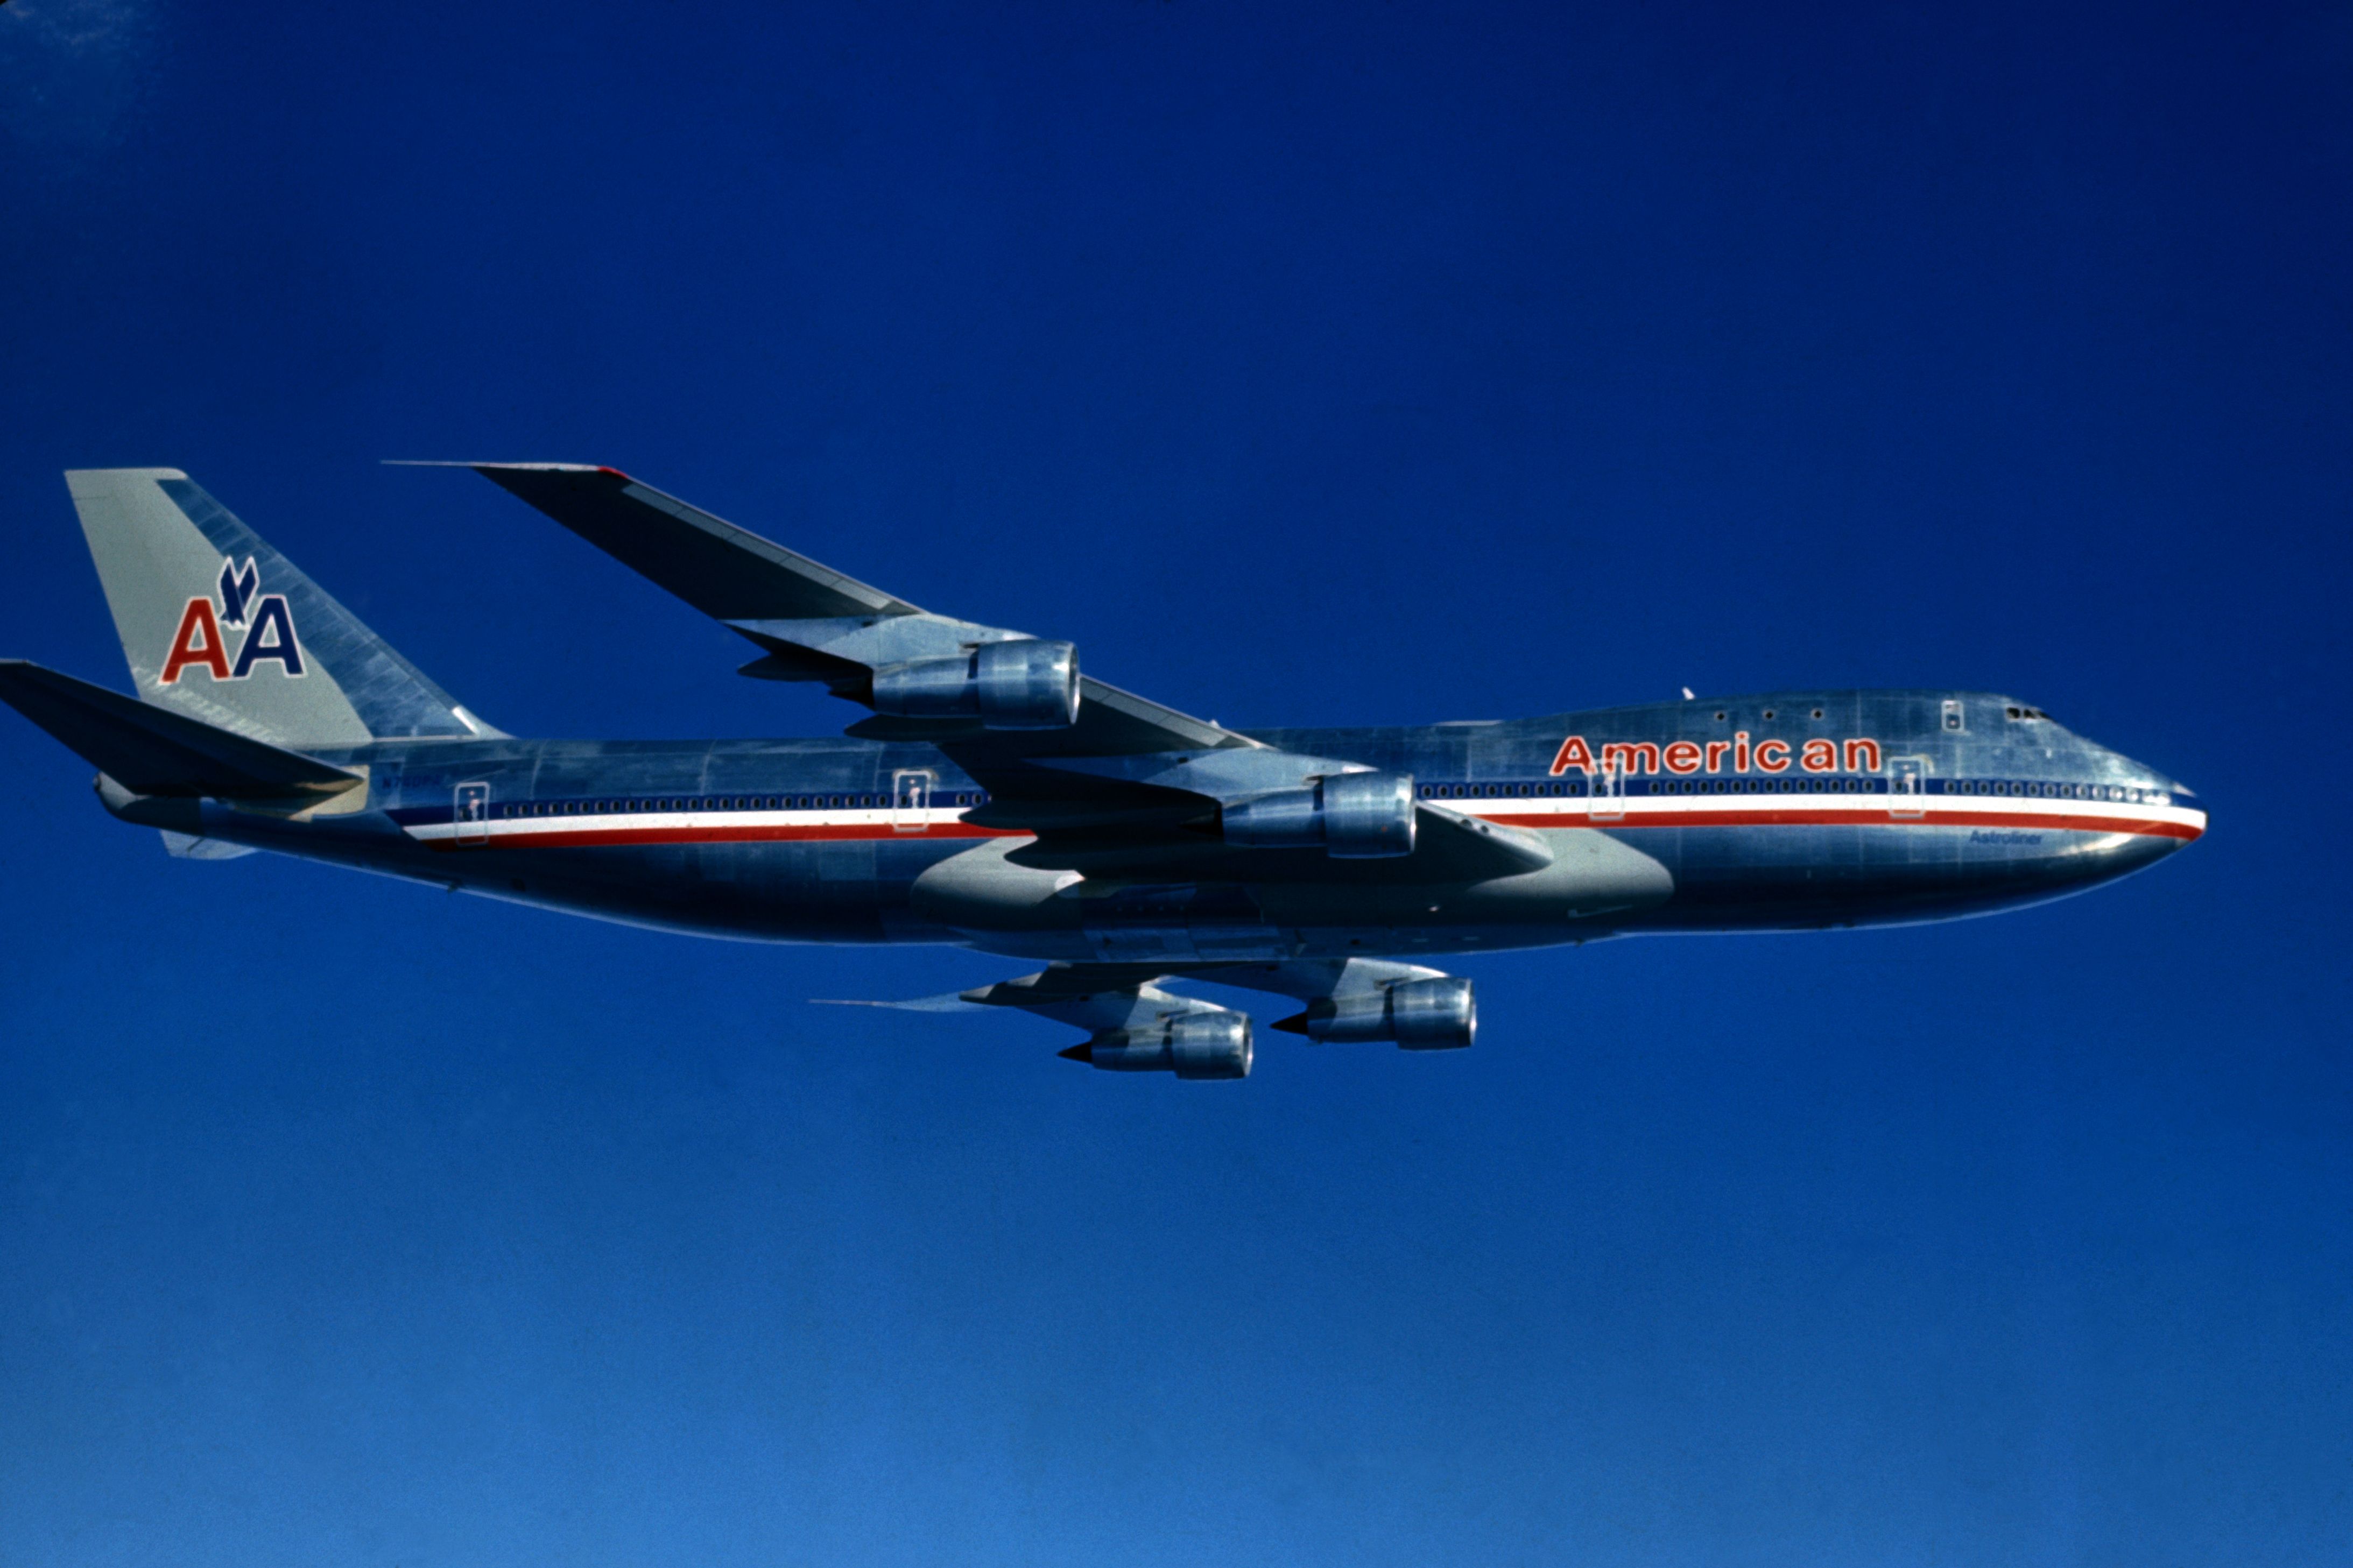 American Airlines Boeing 747 against blue sky